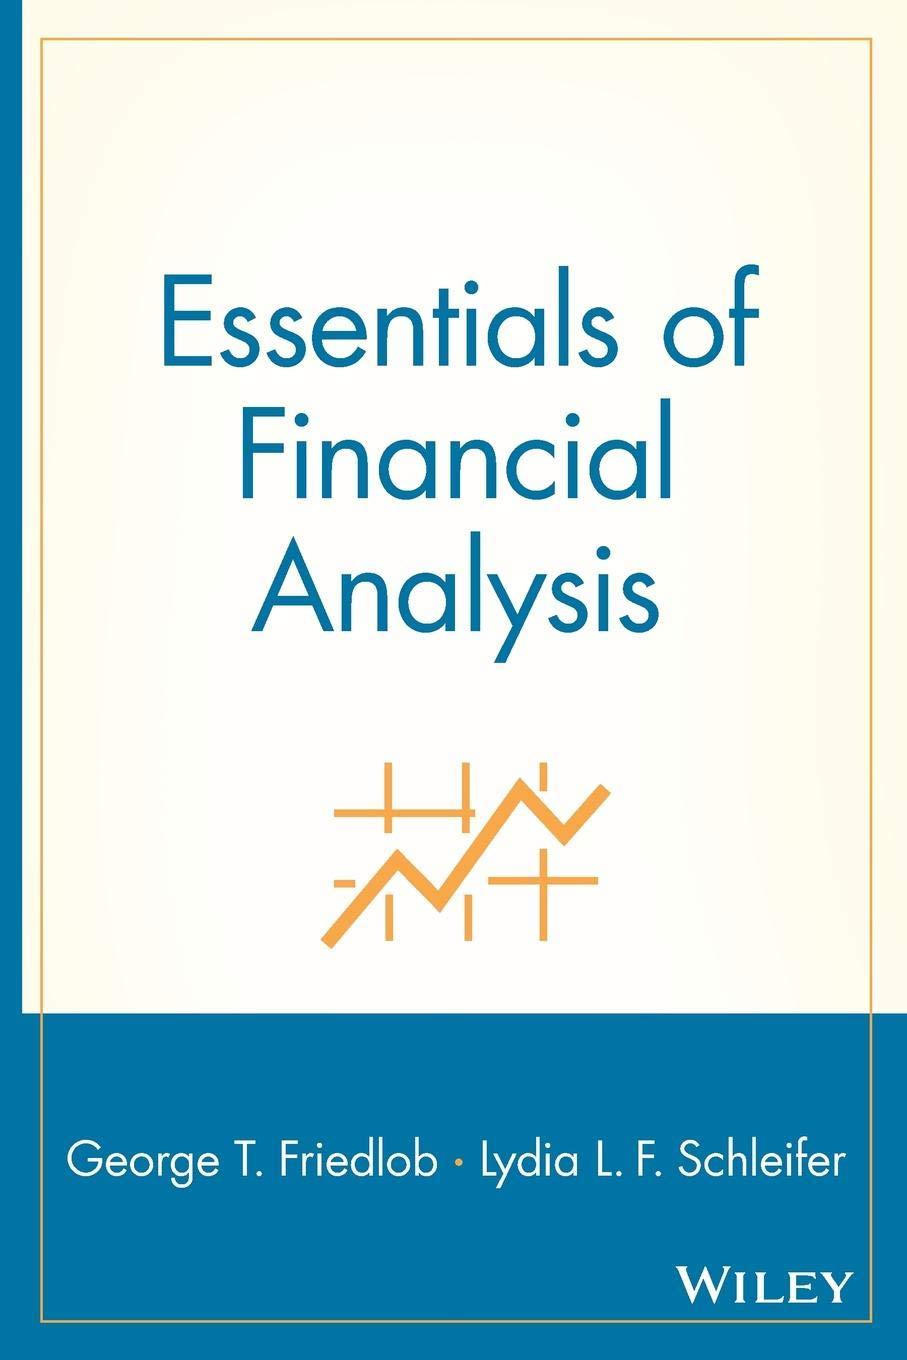 essentials of financial analysis 1st edition george t. friedlob, lydia l. f. schleifer, l.f. schleifer